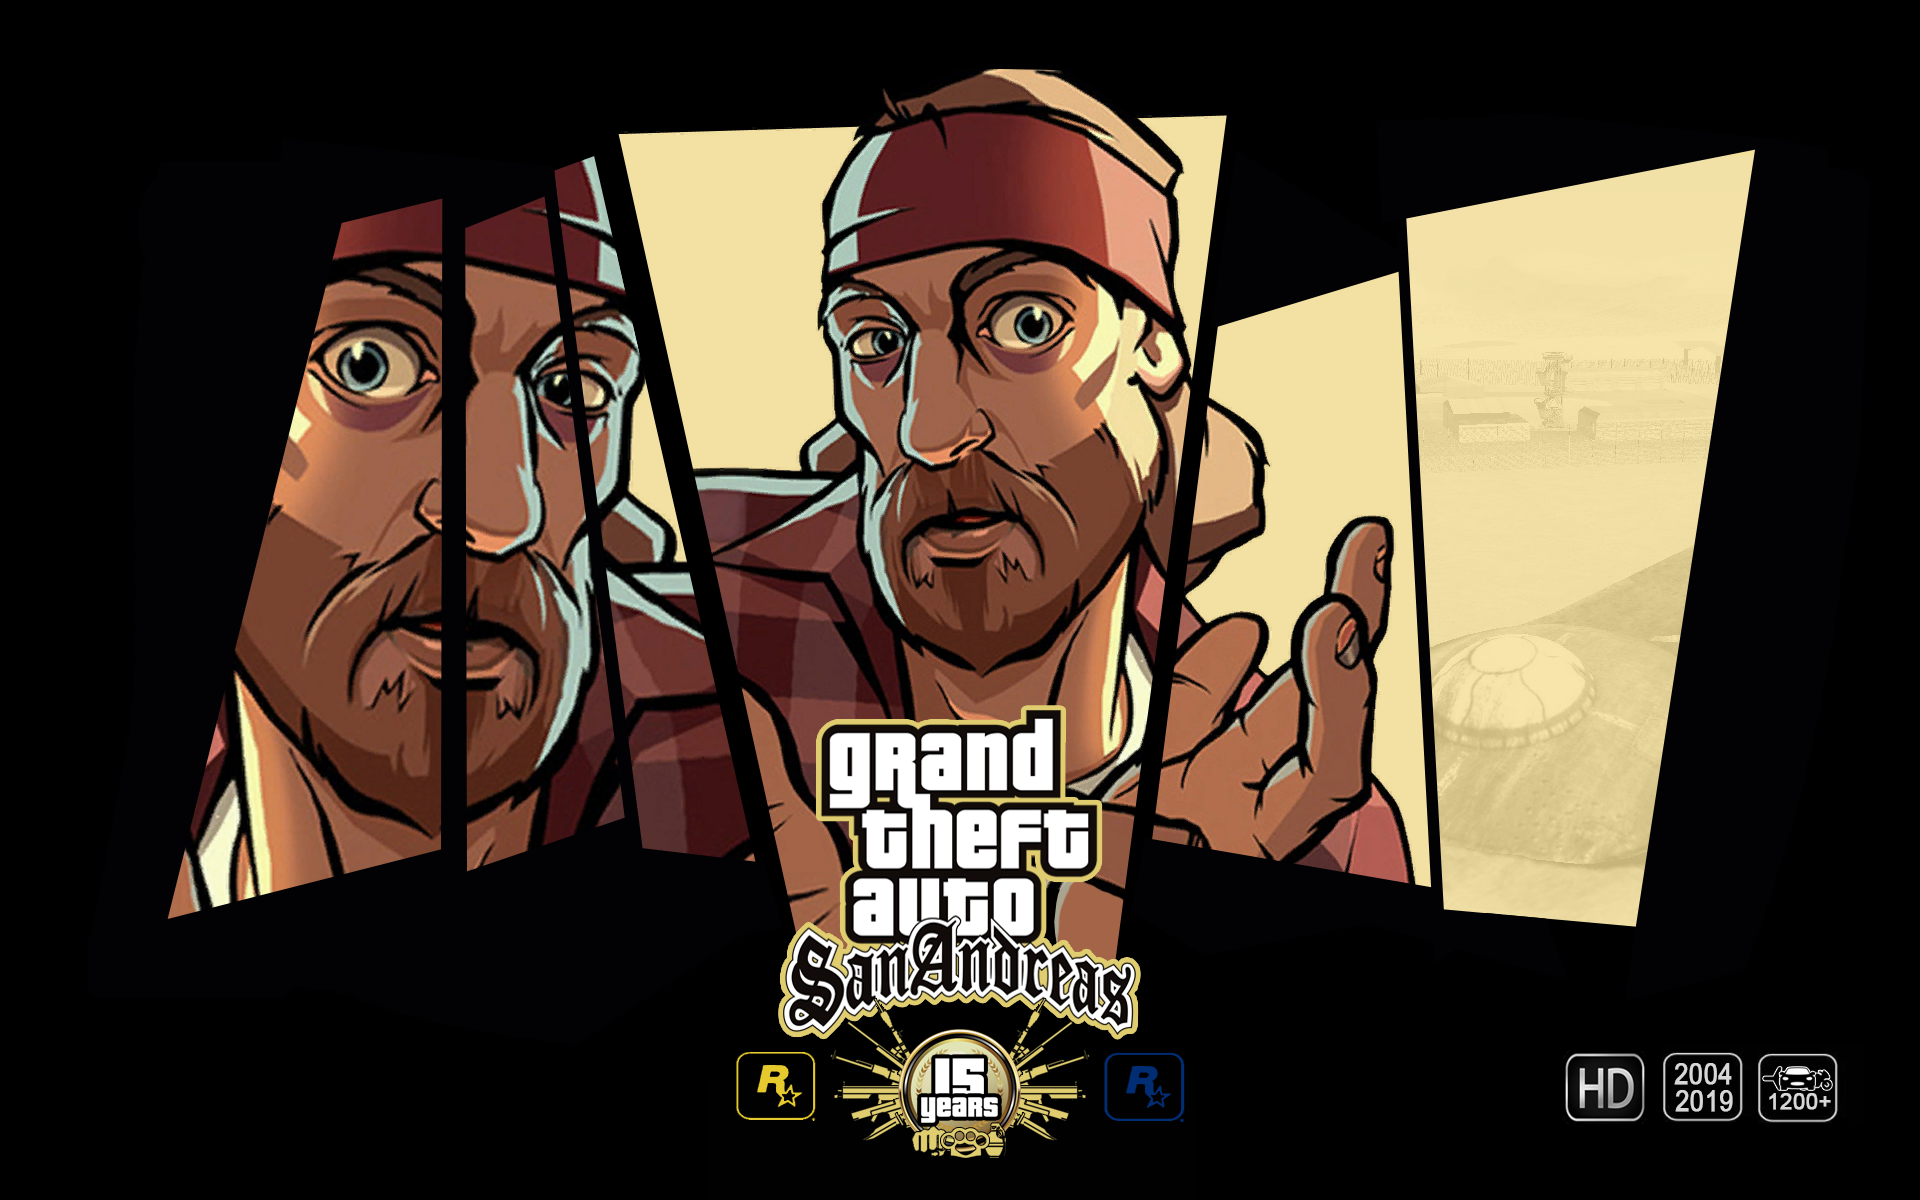 Gta Anniversary Gta San Andreas Grand Theft Auto Game Poster Video Games Wallpaper Resolution 19x10 Id 4643 Wallha Com